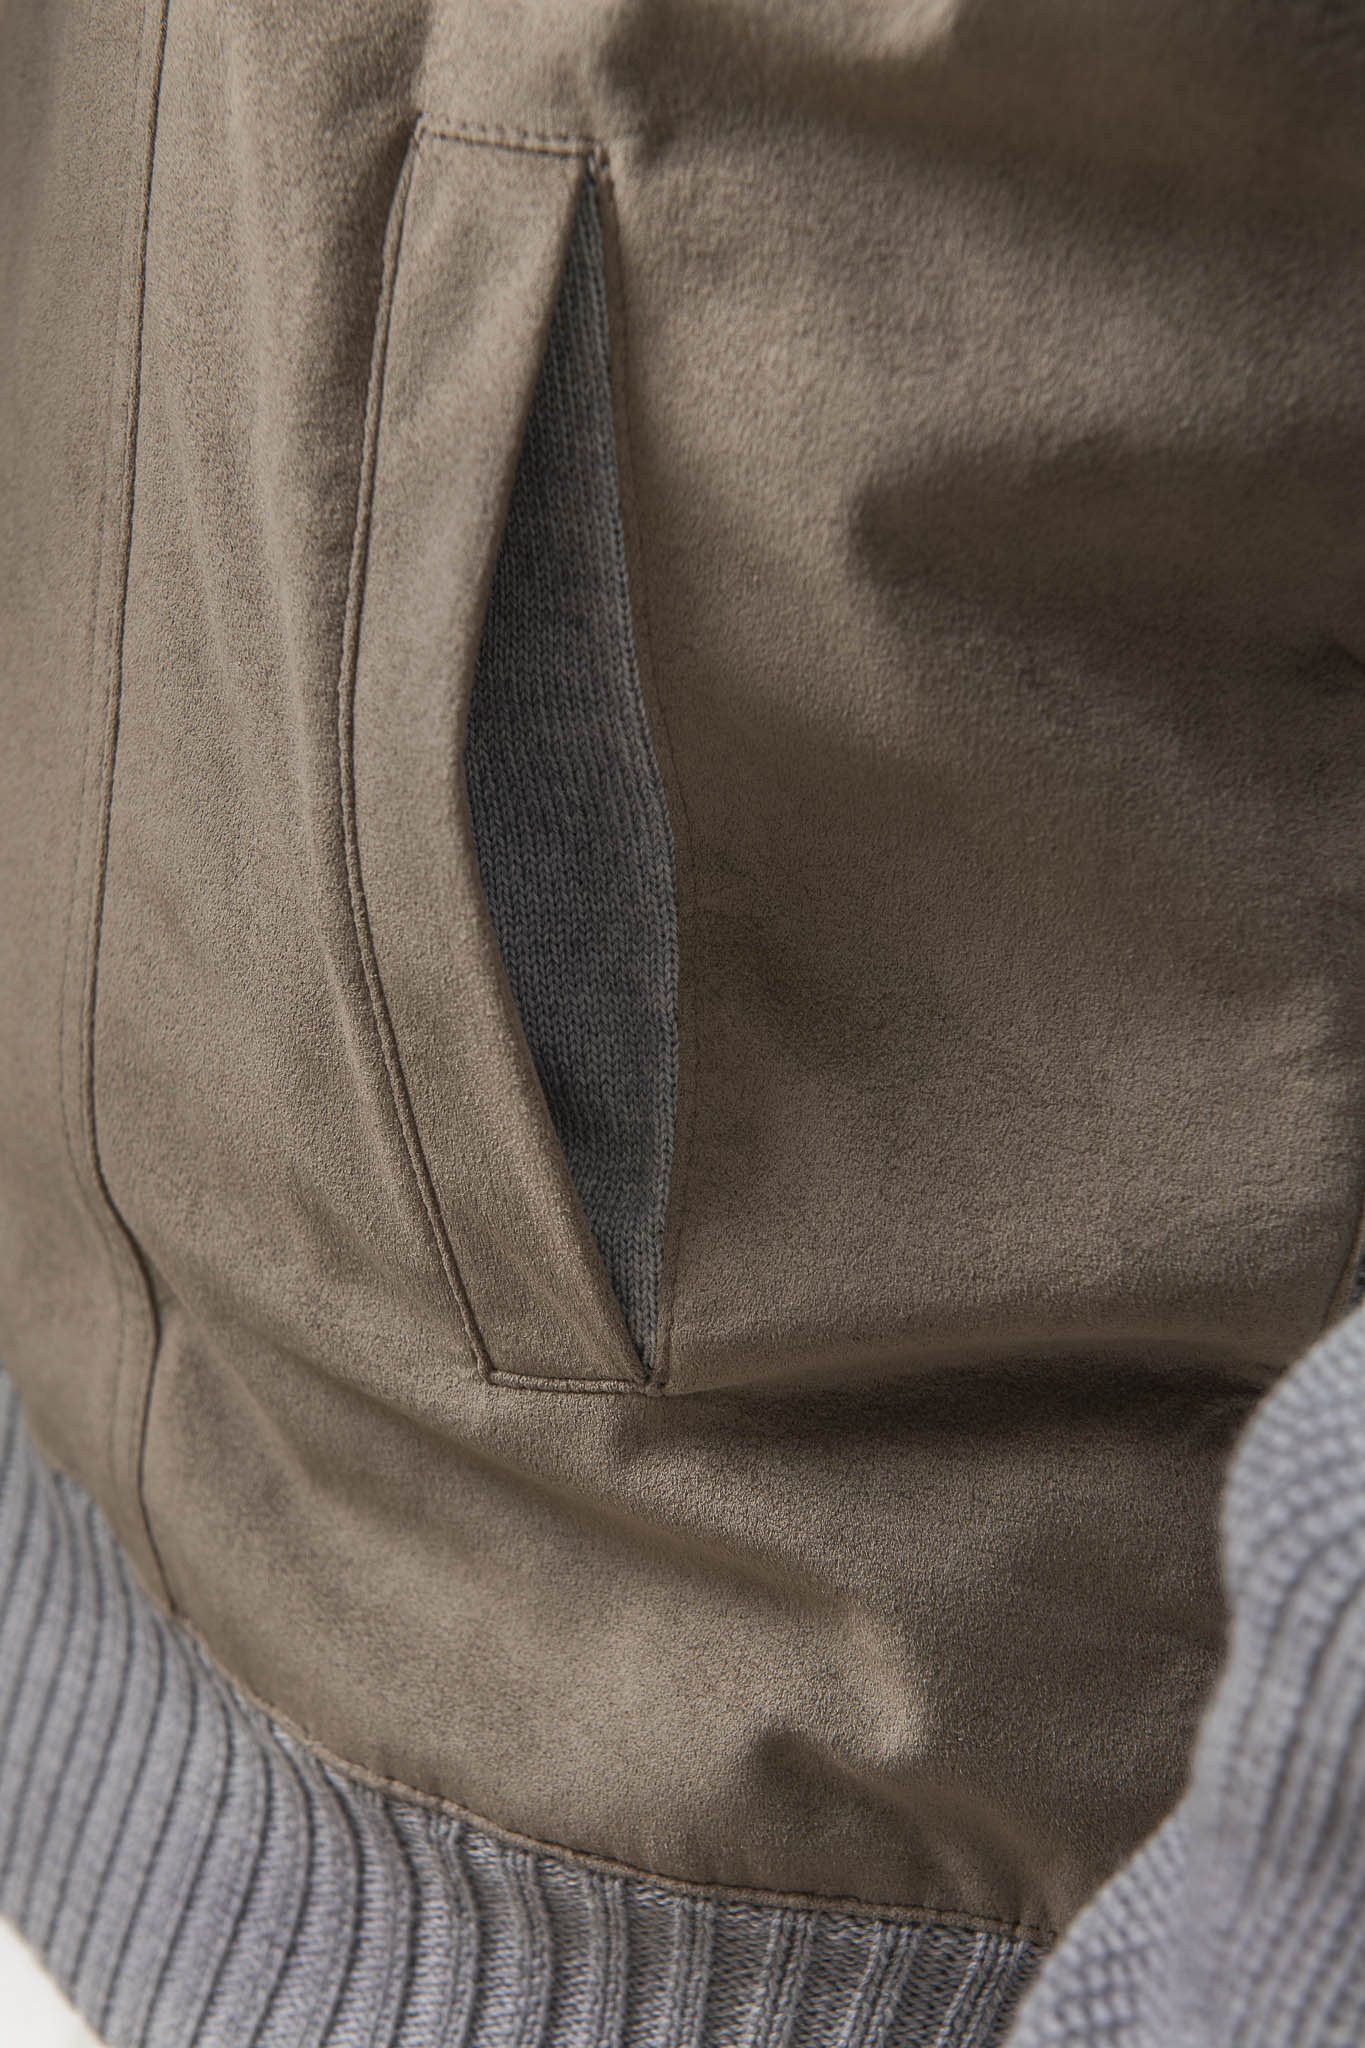 Grey and taupe cardigan - Alcantara & wool - Made in Italy